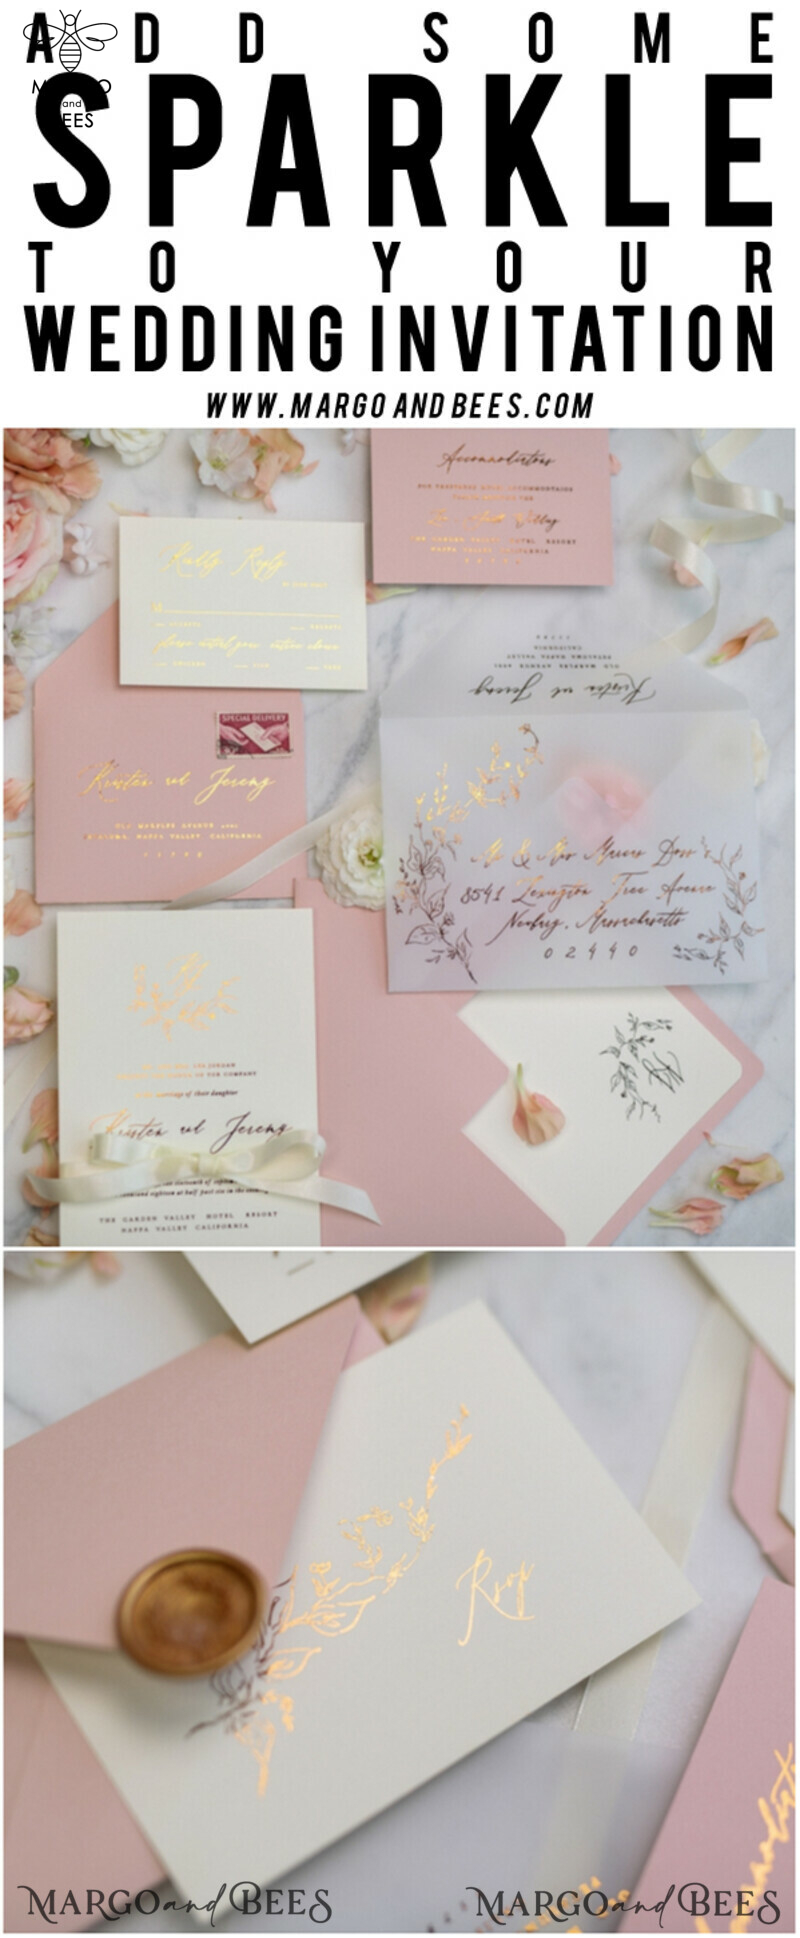 Bespoke Vellum Wedding Invitation Suite: Romantic Blush Pink and Glamour Gold Foil for Elegant Golden Wedding Invites-35